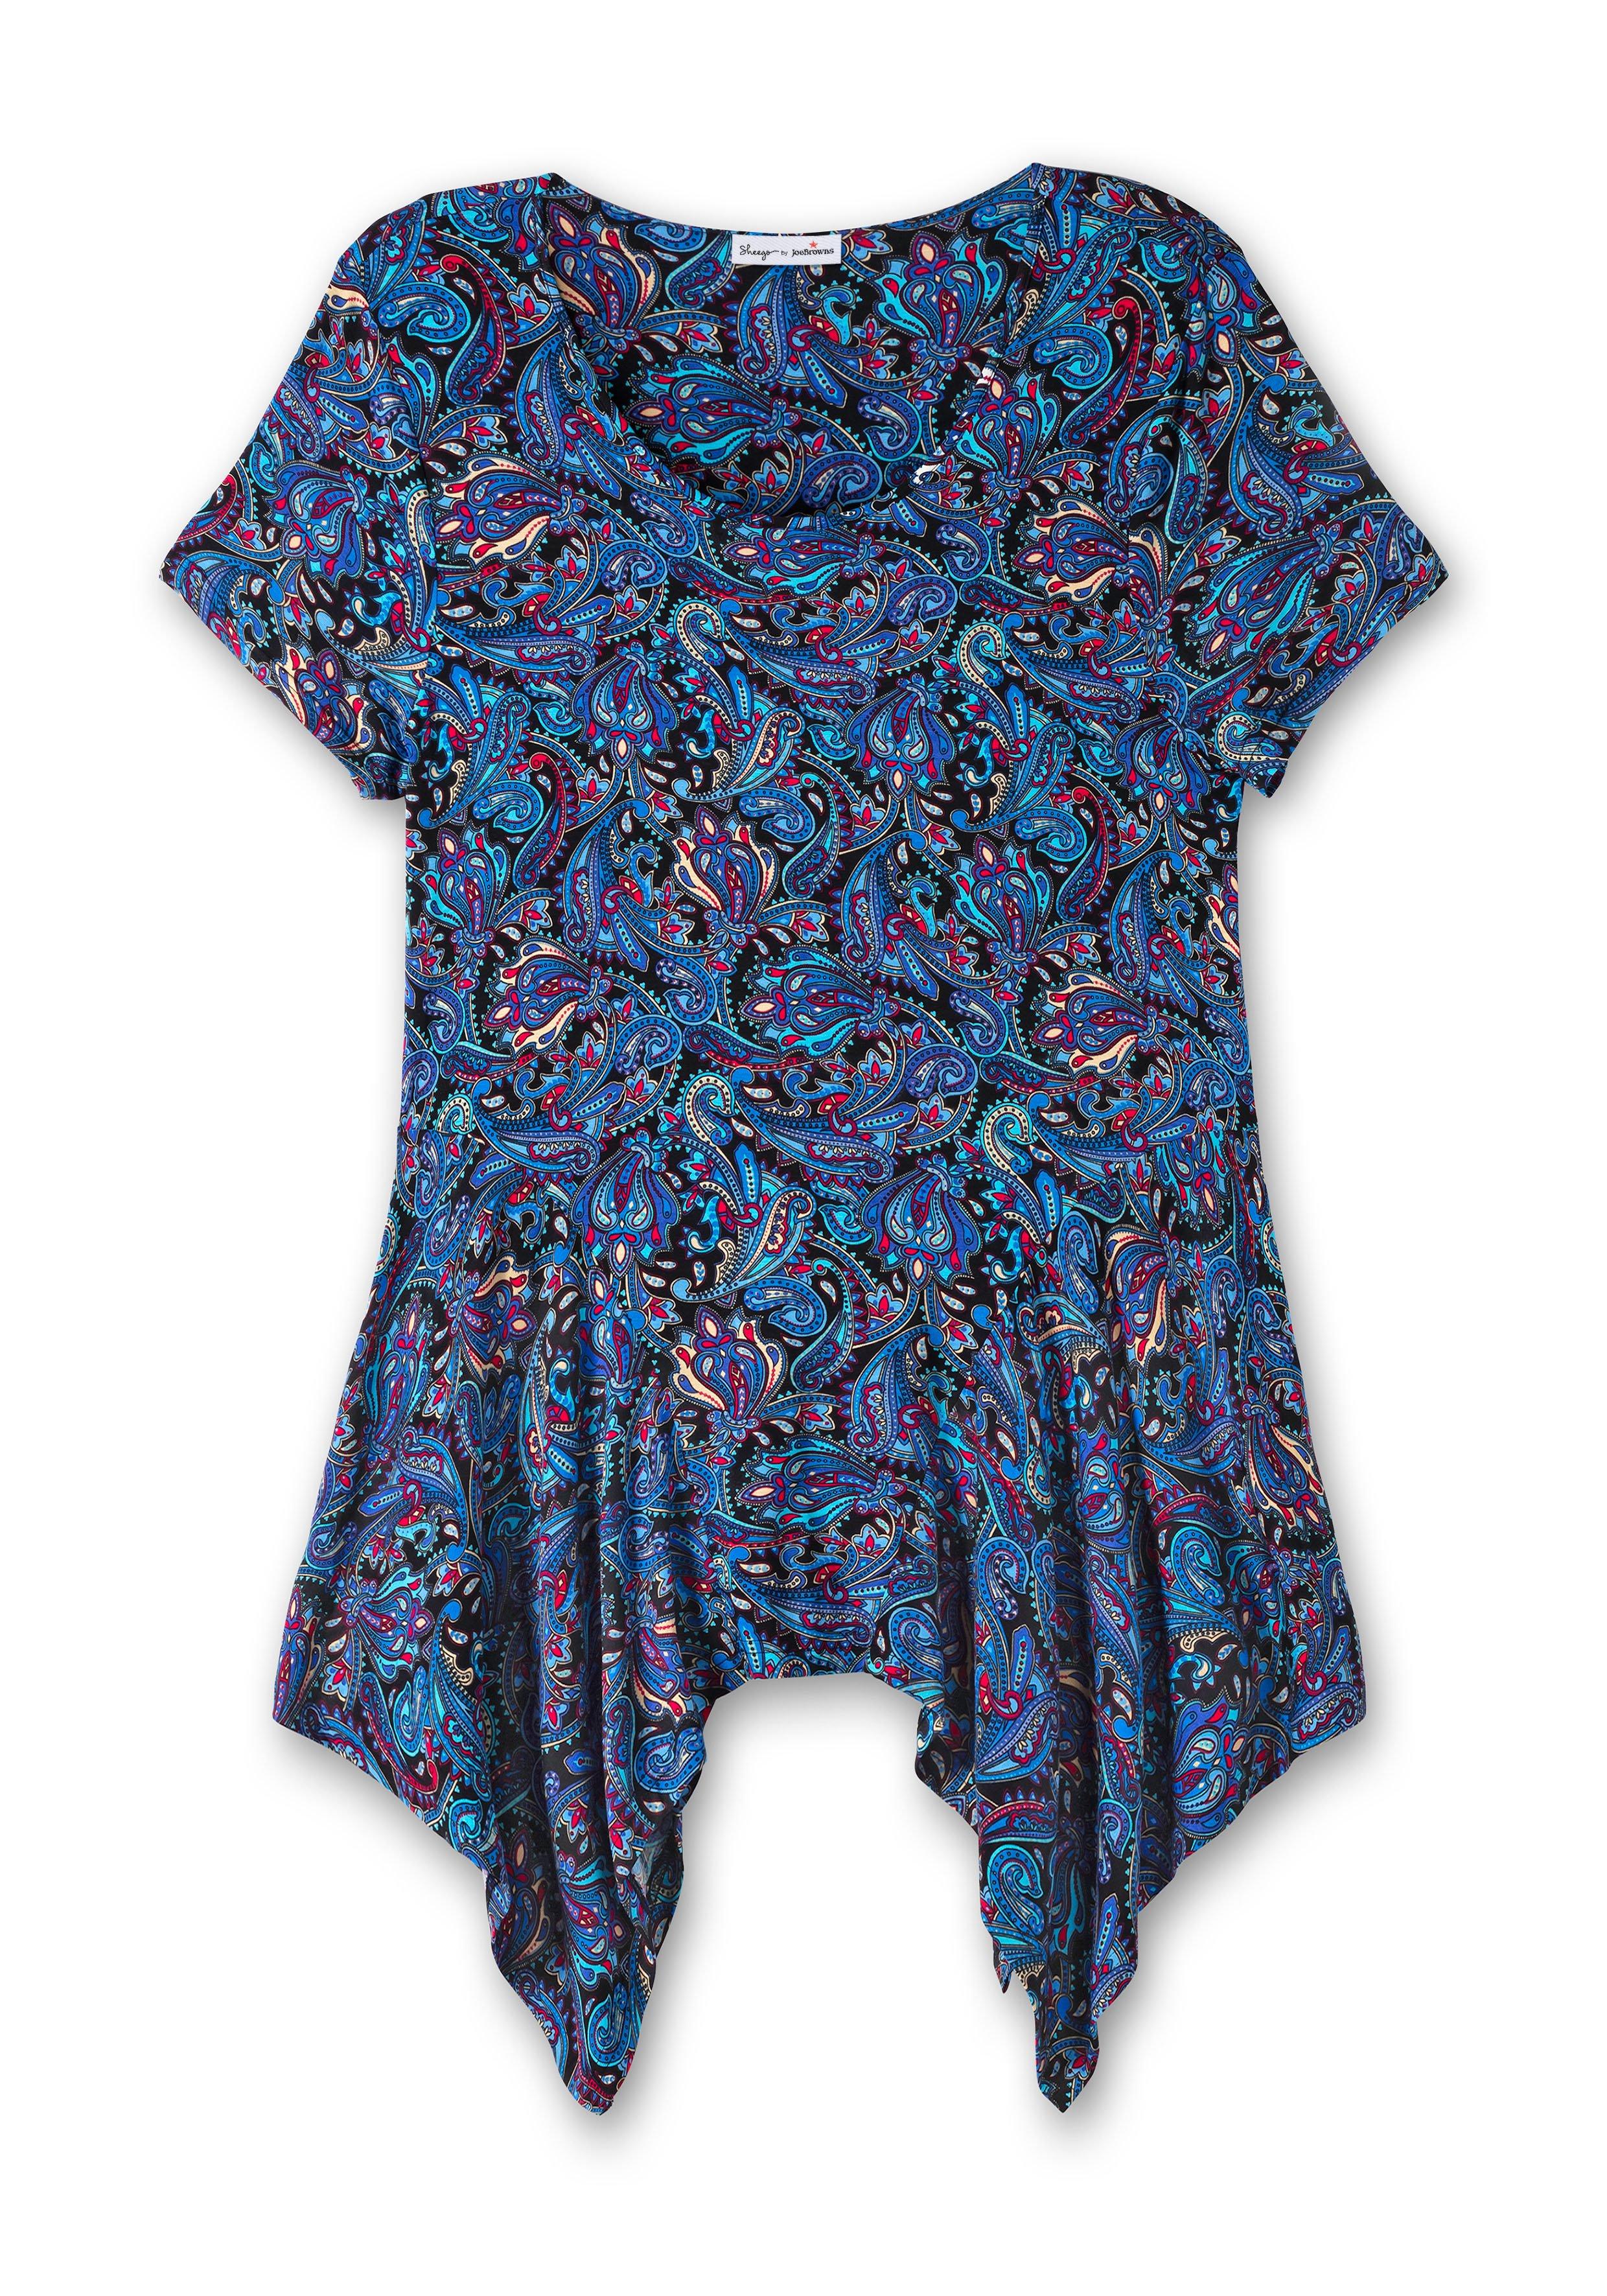 Zipfelshirt mit sheego Longform, gemustert - | blau Paisleydruck in